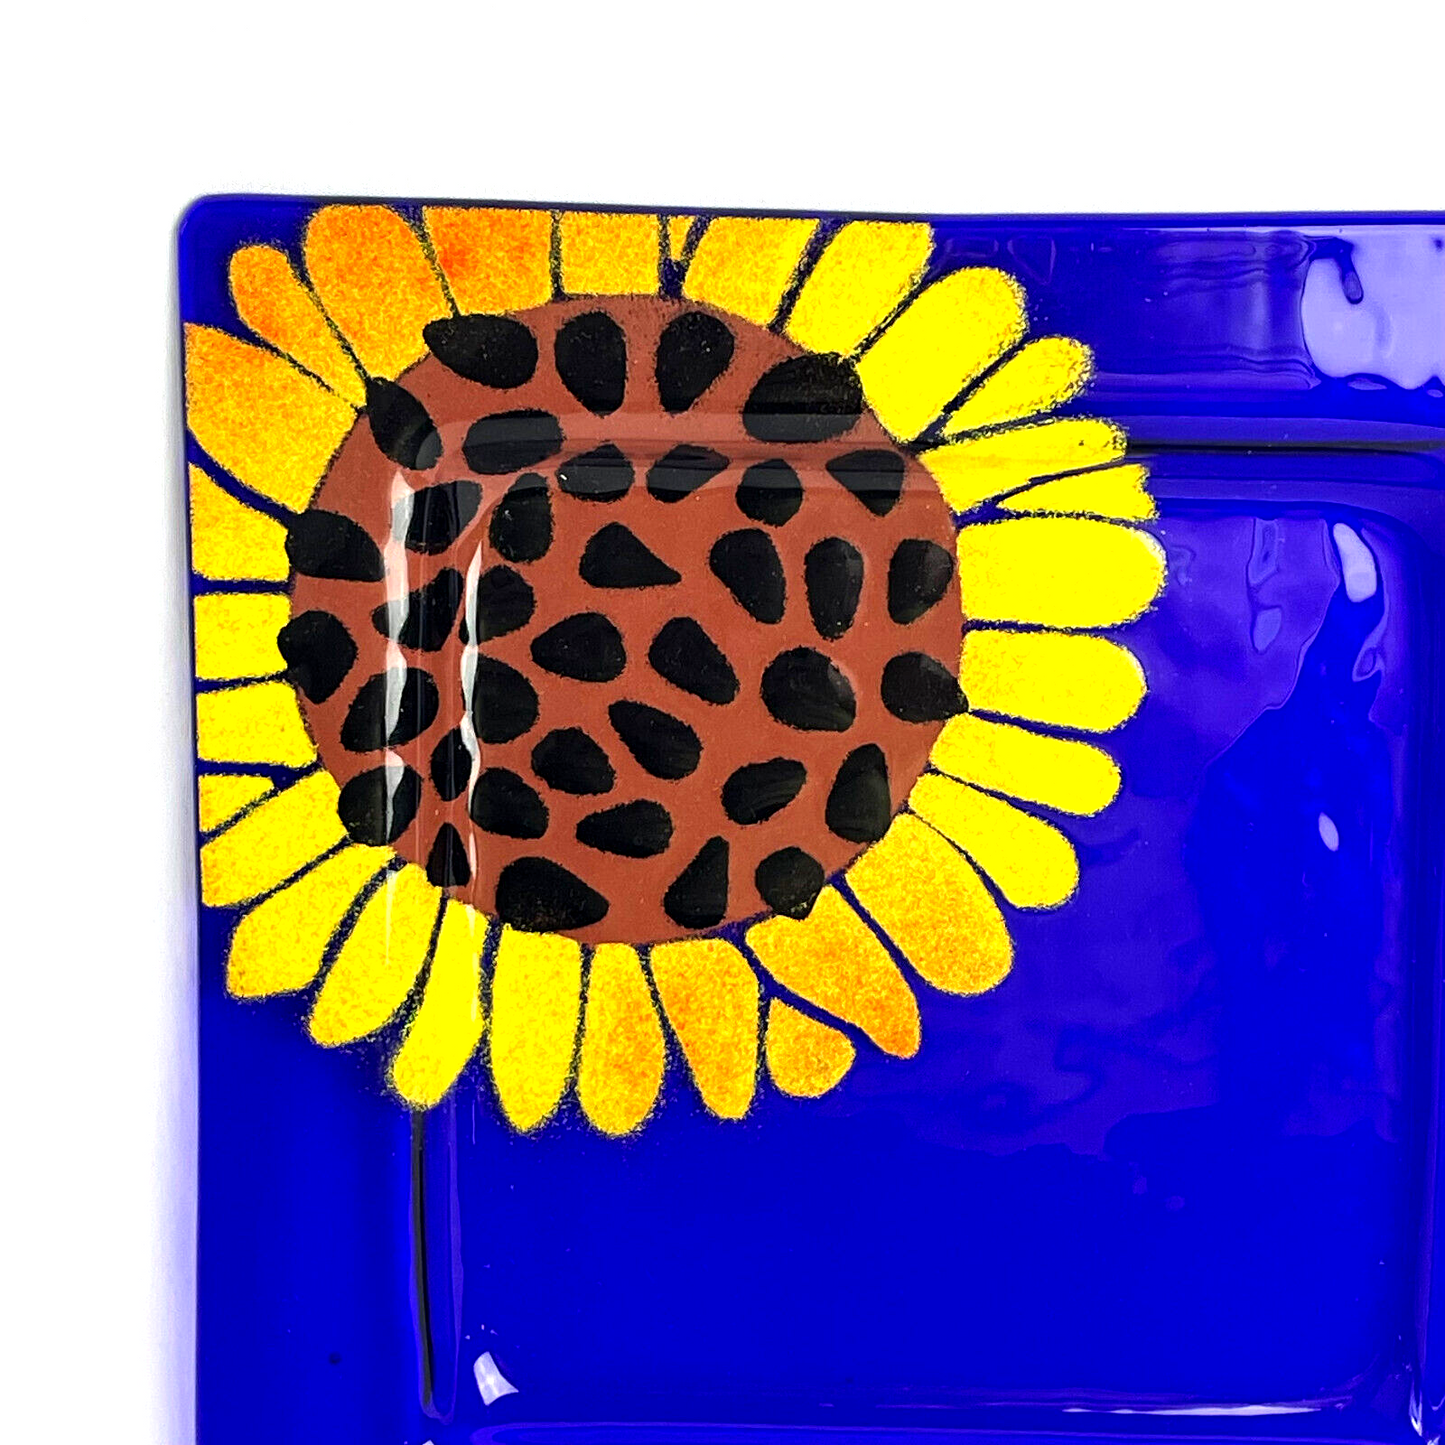 Jan Mitchell Signed Studio Art Glass Cobalt Blue Dish with Sunflower